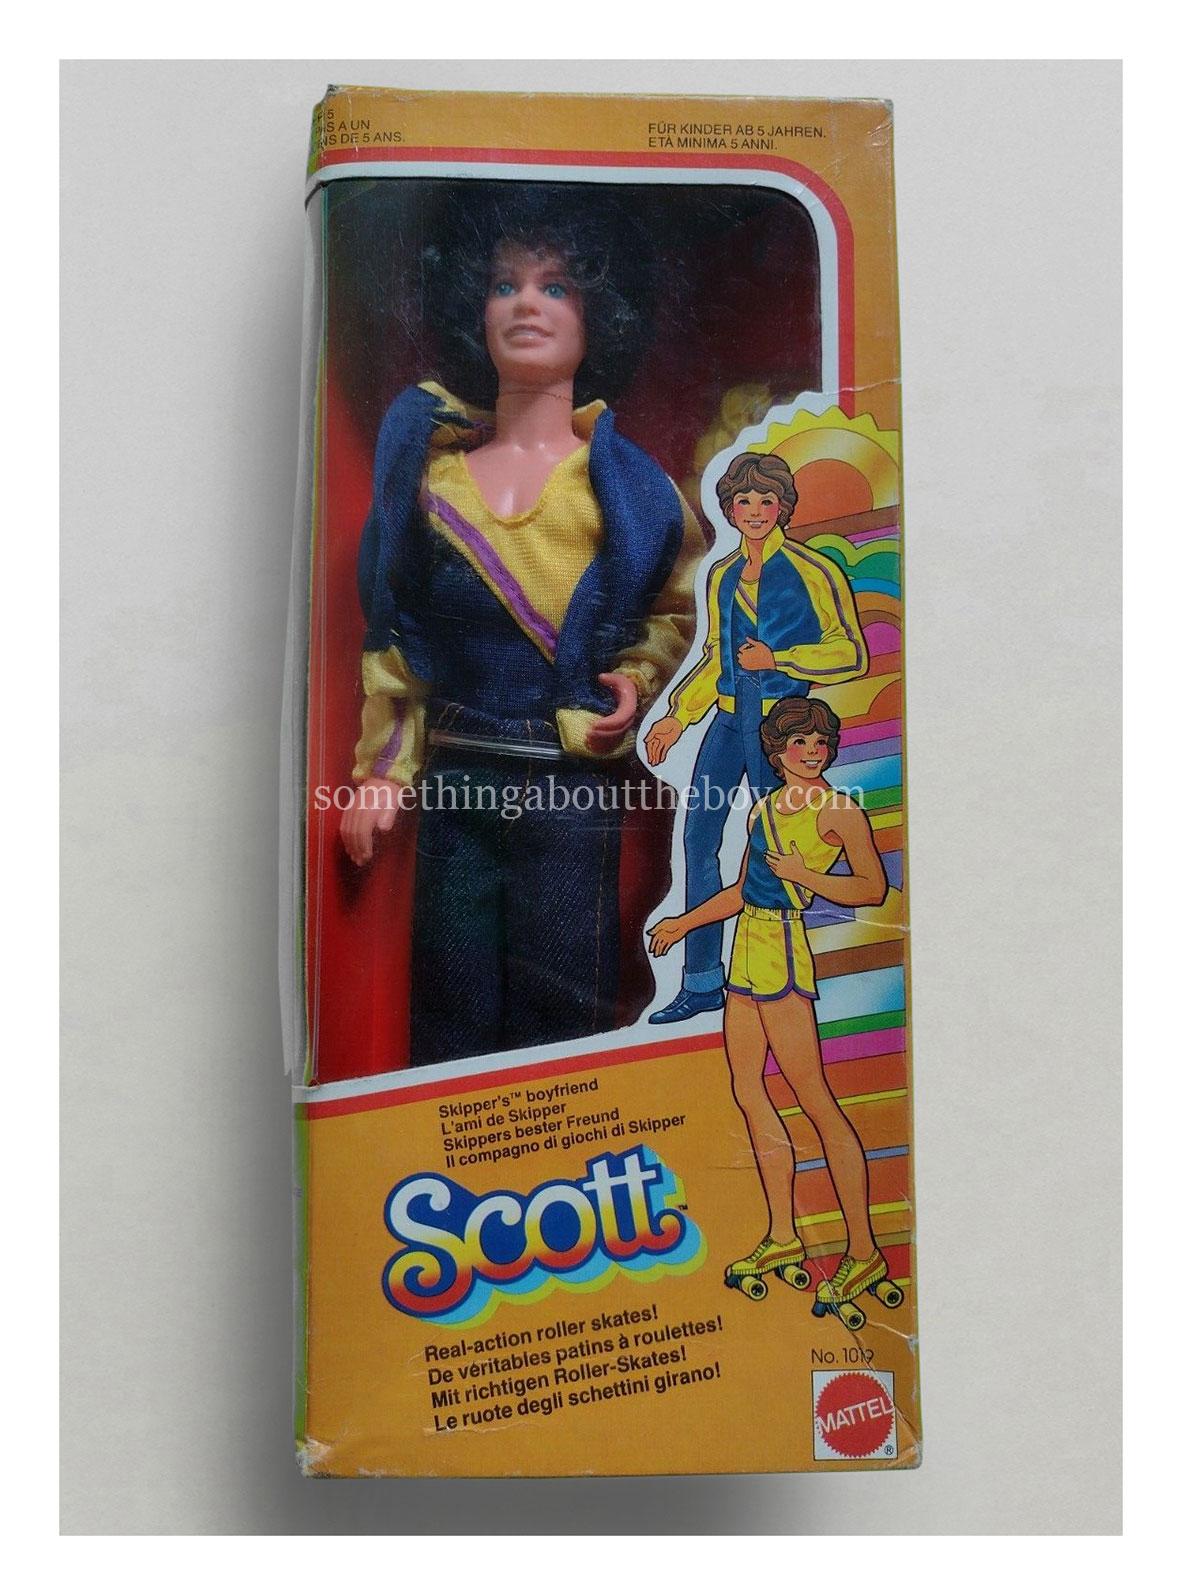 1980 #1019 Scott in European packaging